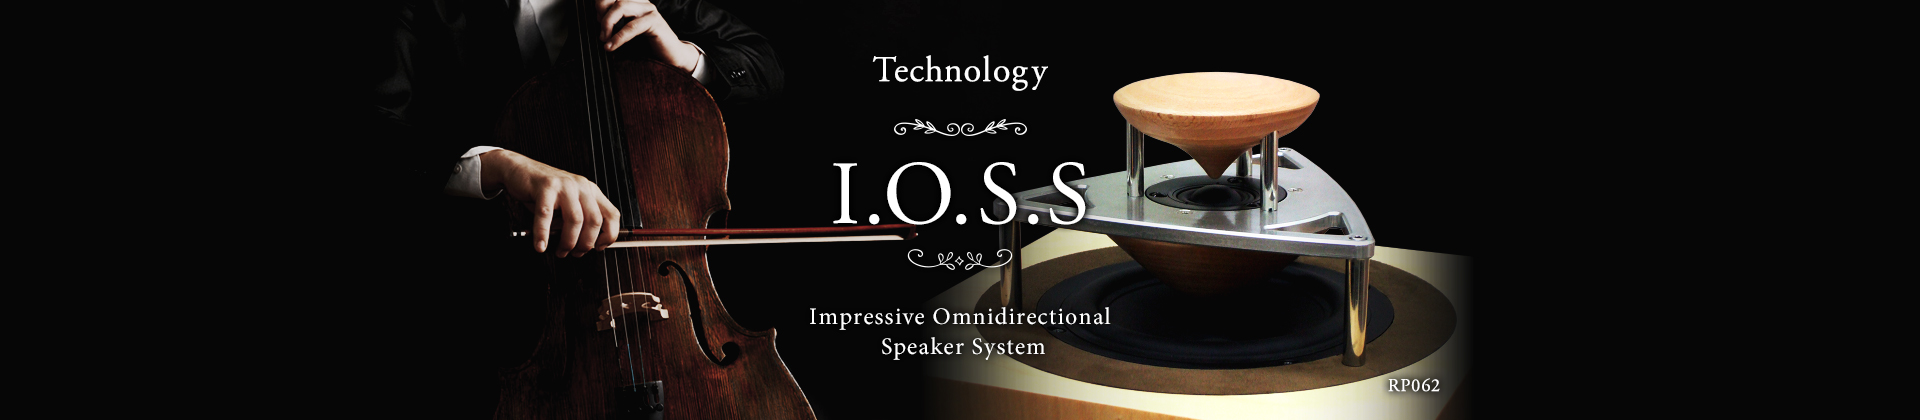 High Quality Sound|IOSS|Impressive Omnidirectional Speaker System